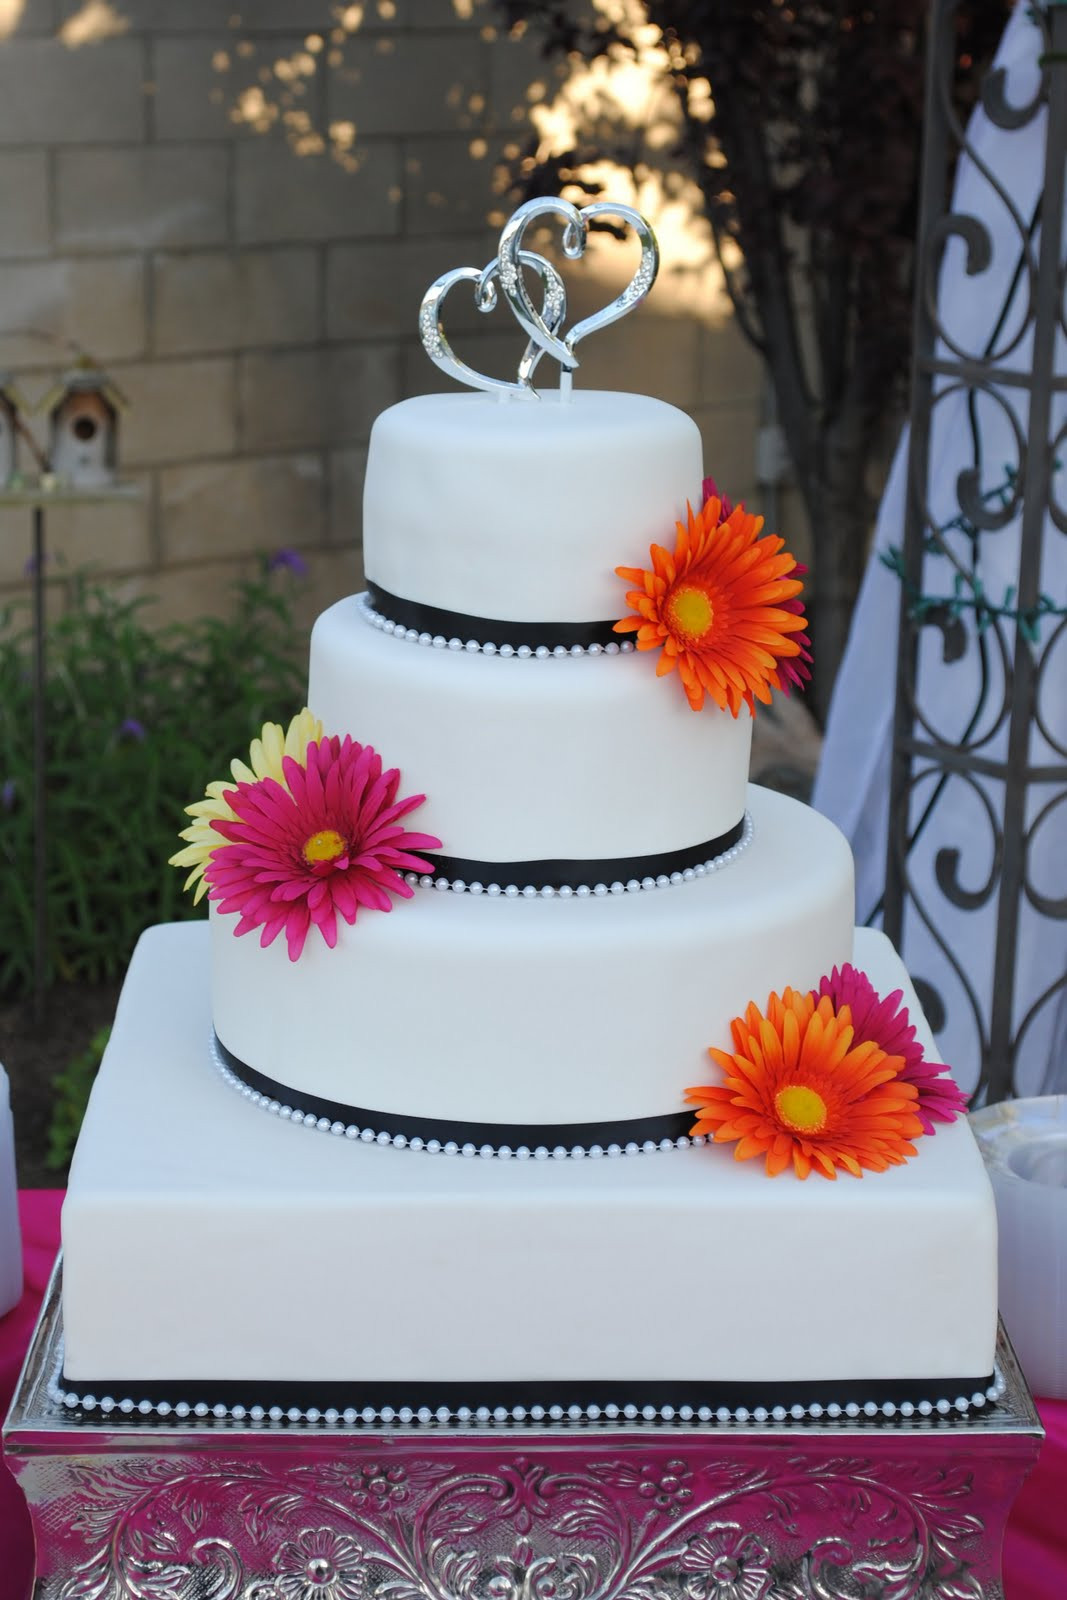 Wedding Cakes Bakersfield Ca the 20 Best Ideas for Sweet Cakes Bakersfield California Wedding Cake